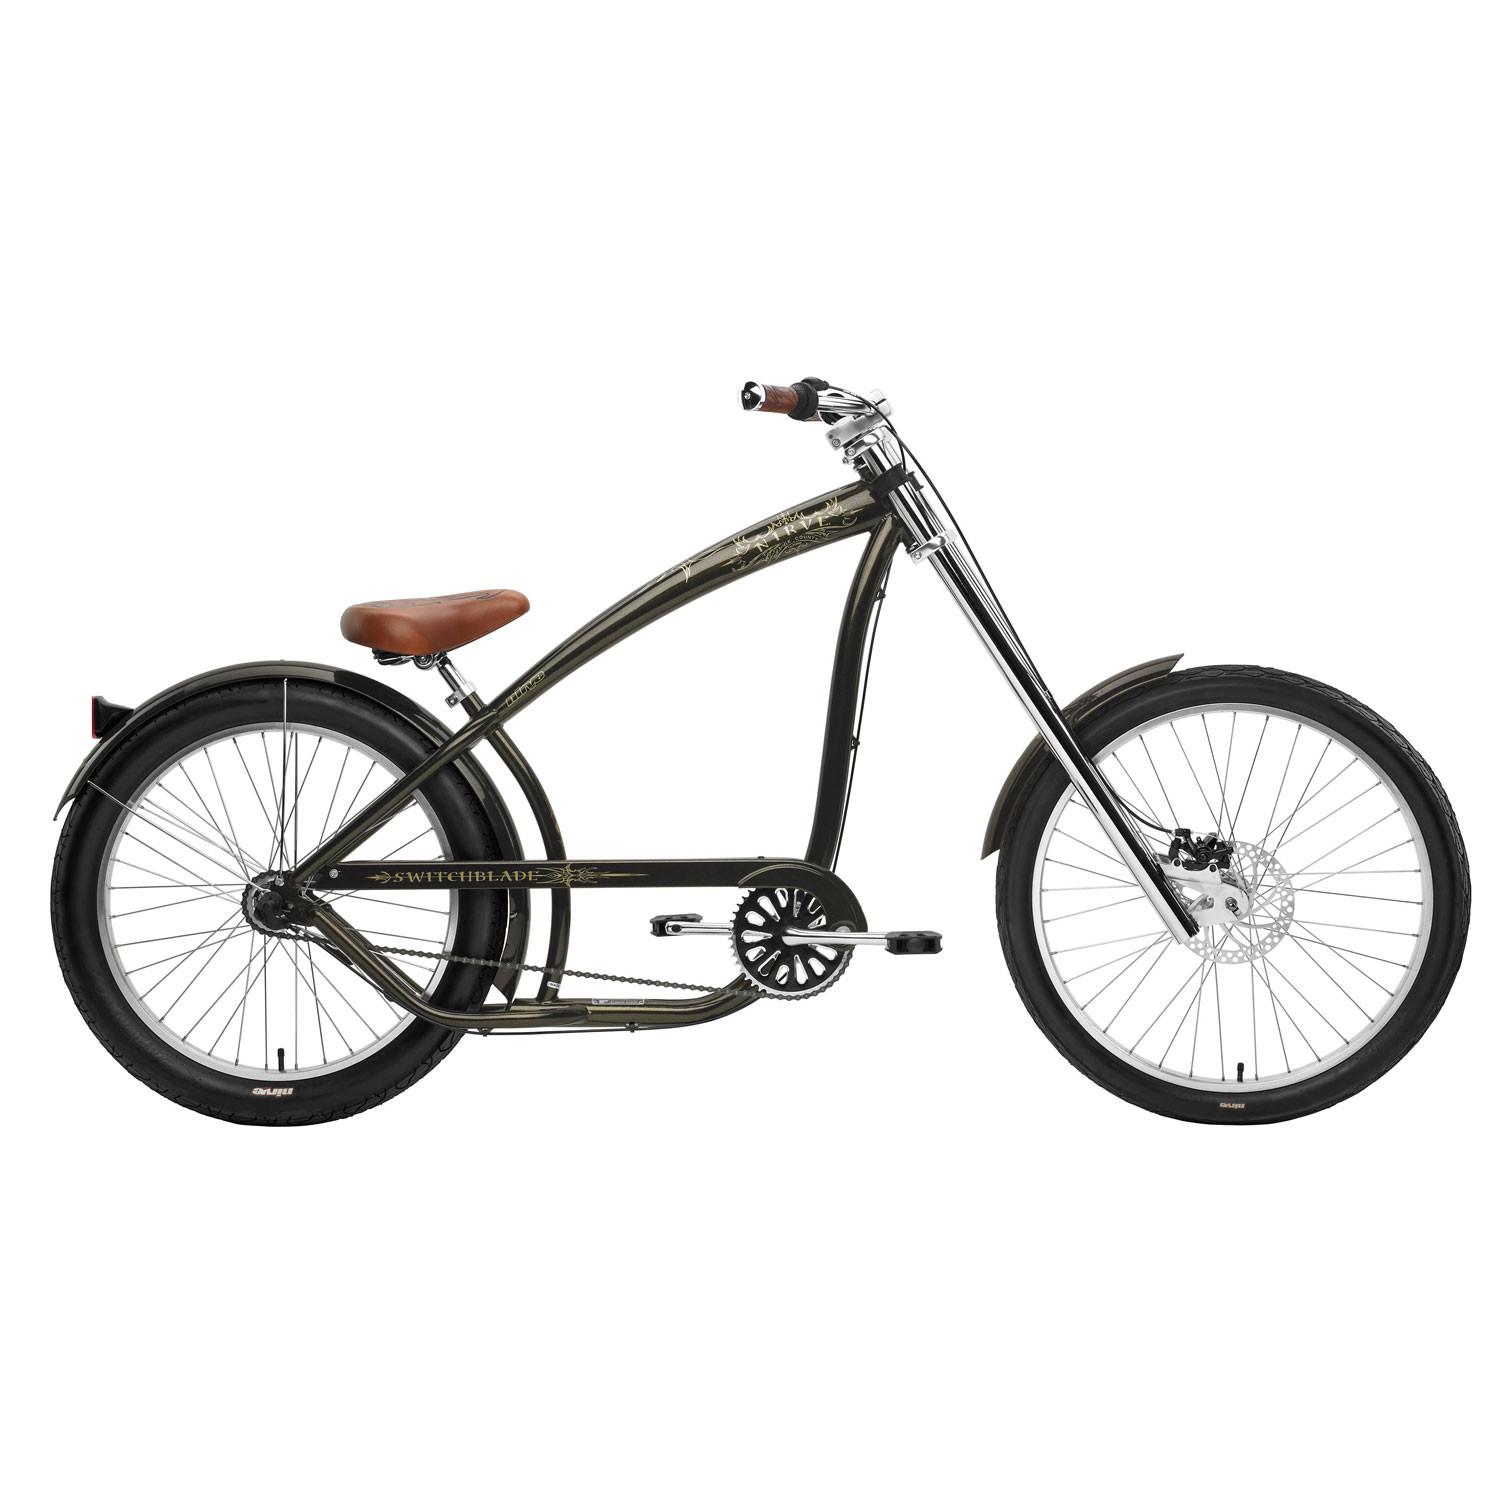 nirve switchblade chopper bike for sale